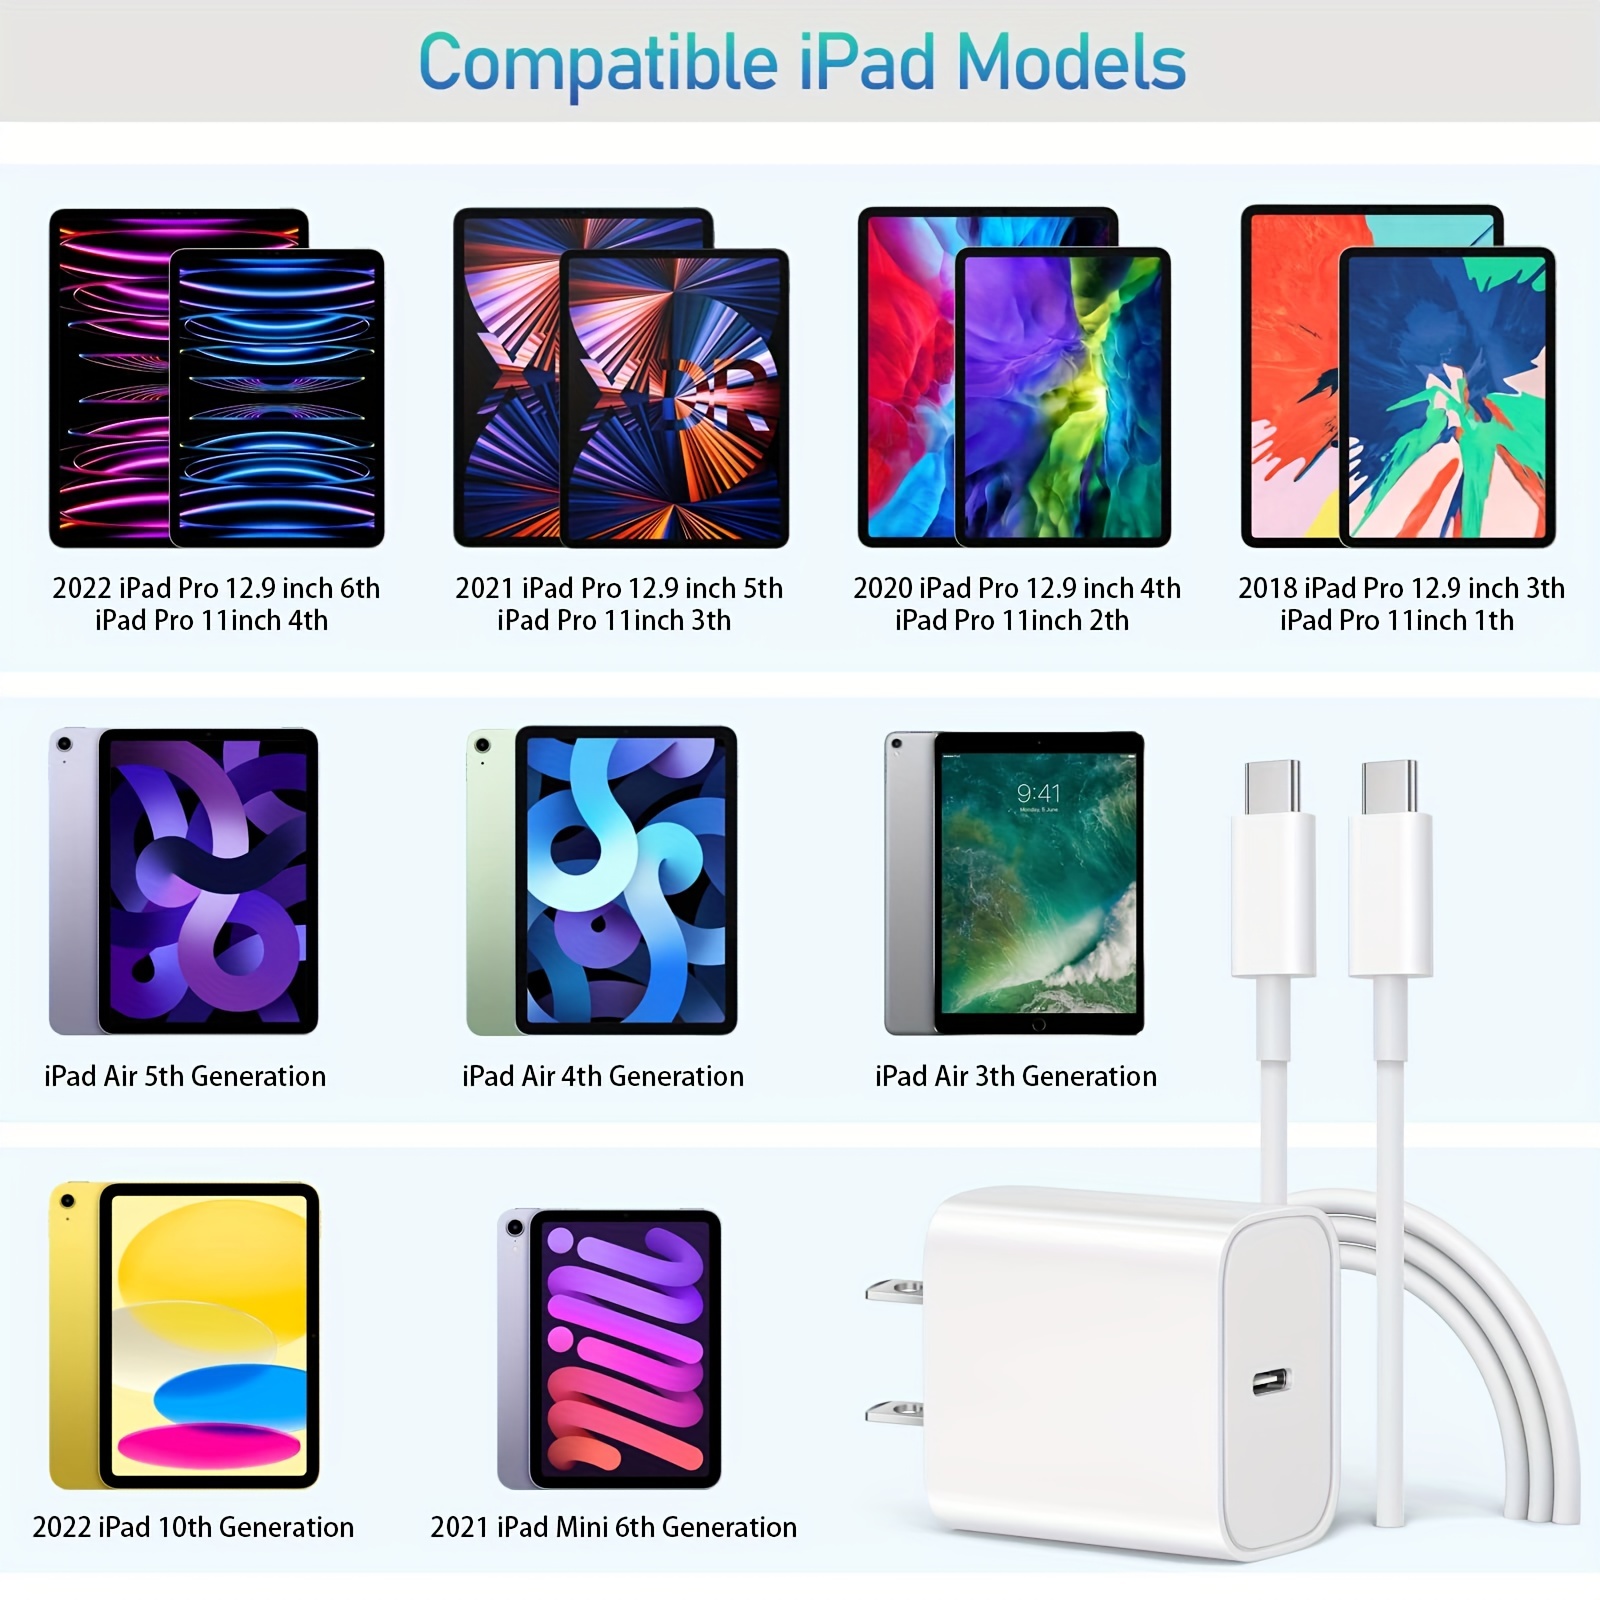 Chargeur Adaptateur Câble USB iPad Mini 2